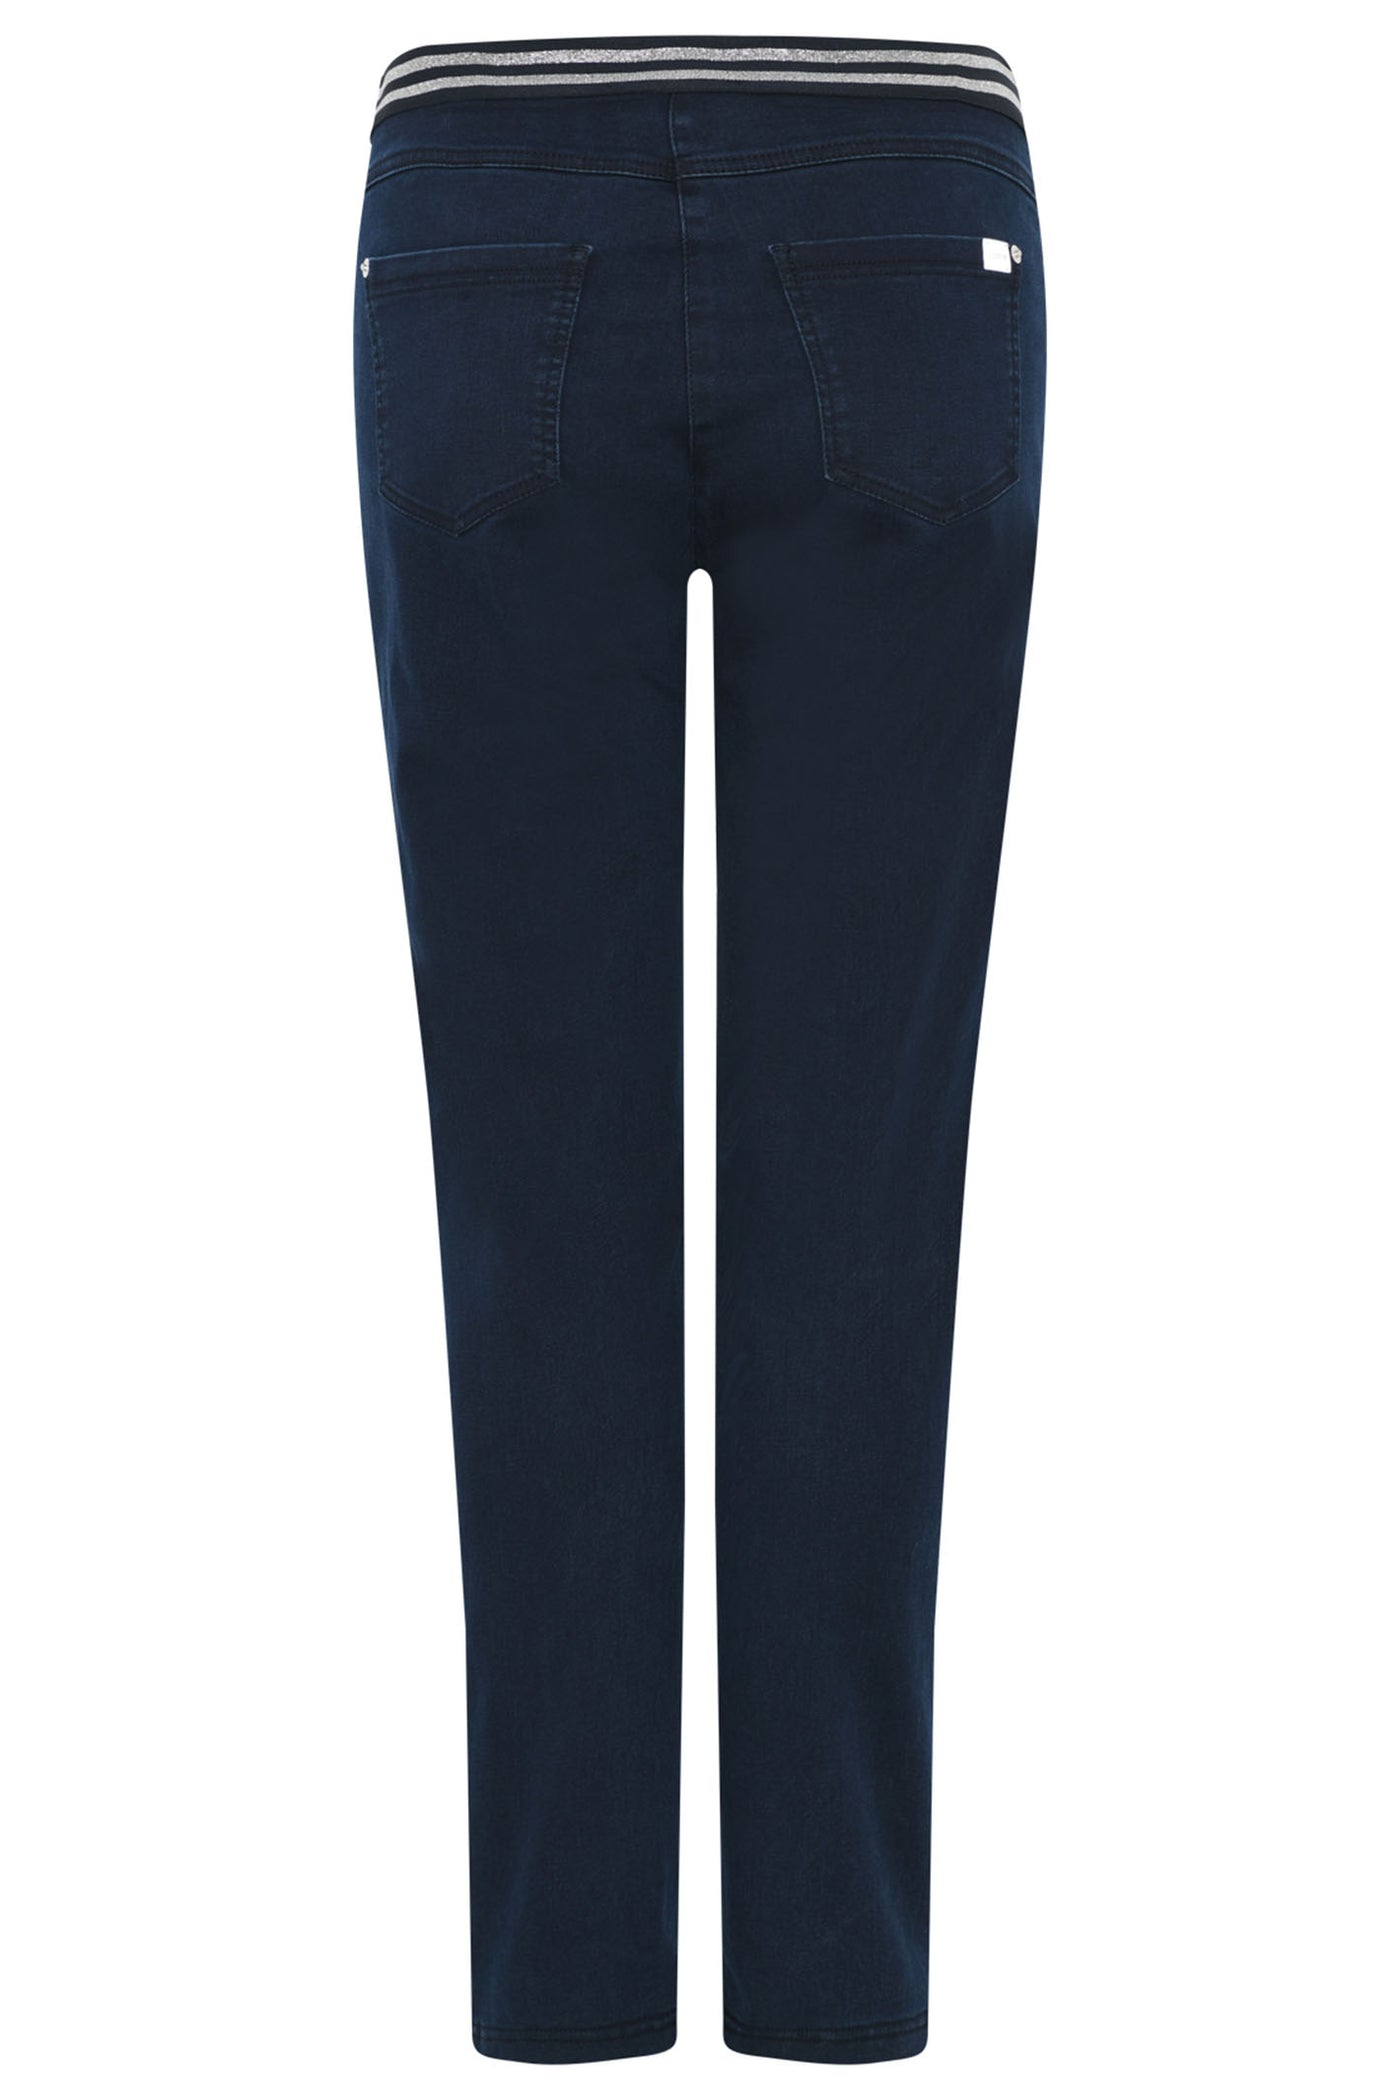 Icona 61044 Blue Denim Elastic Waist Stretch Jeans - Rouge Boutique Inverness